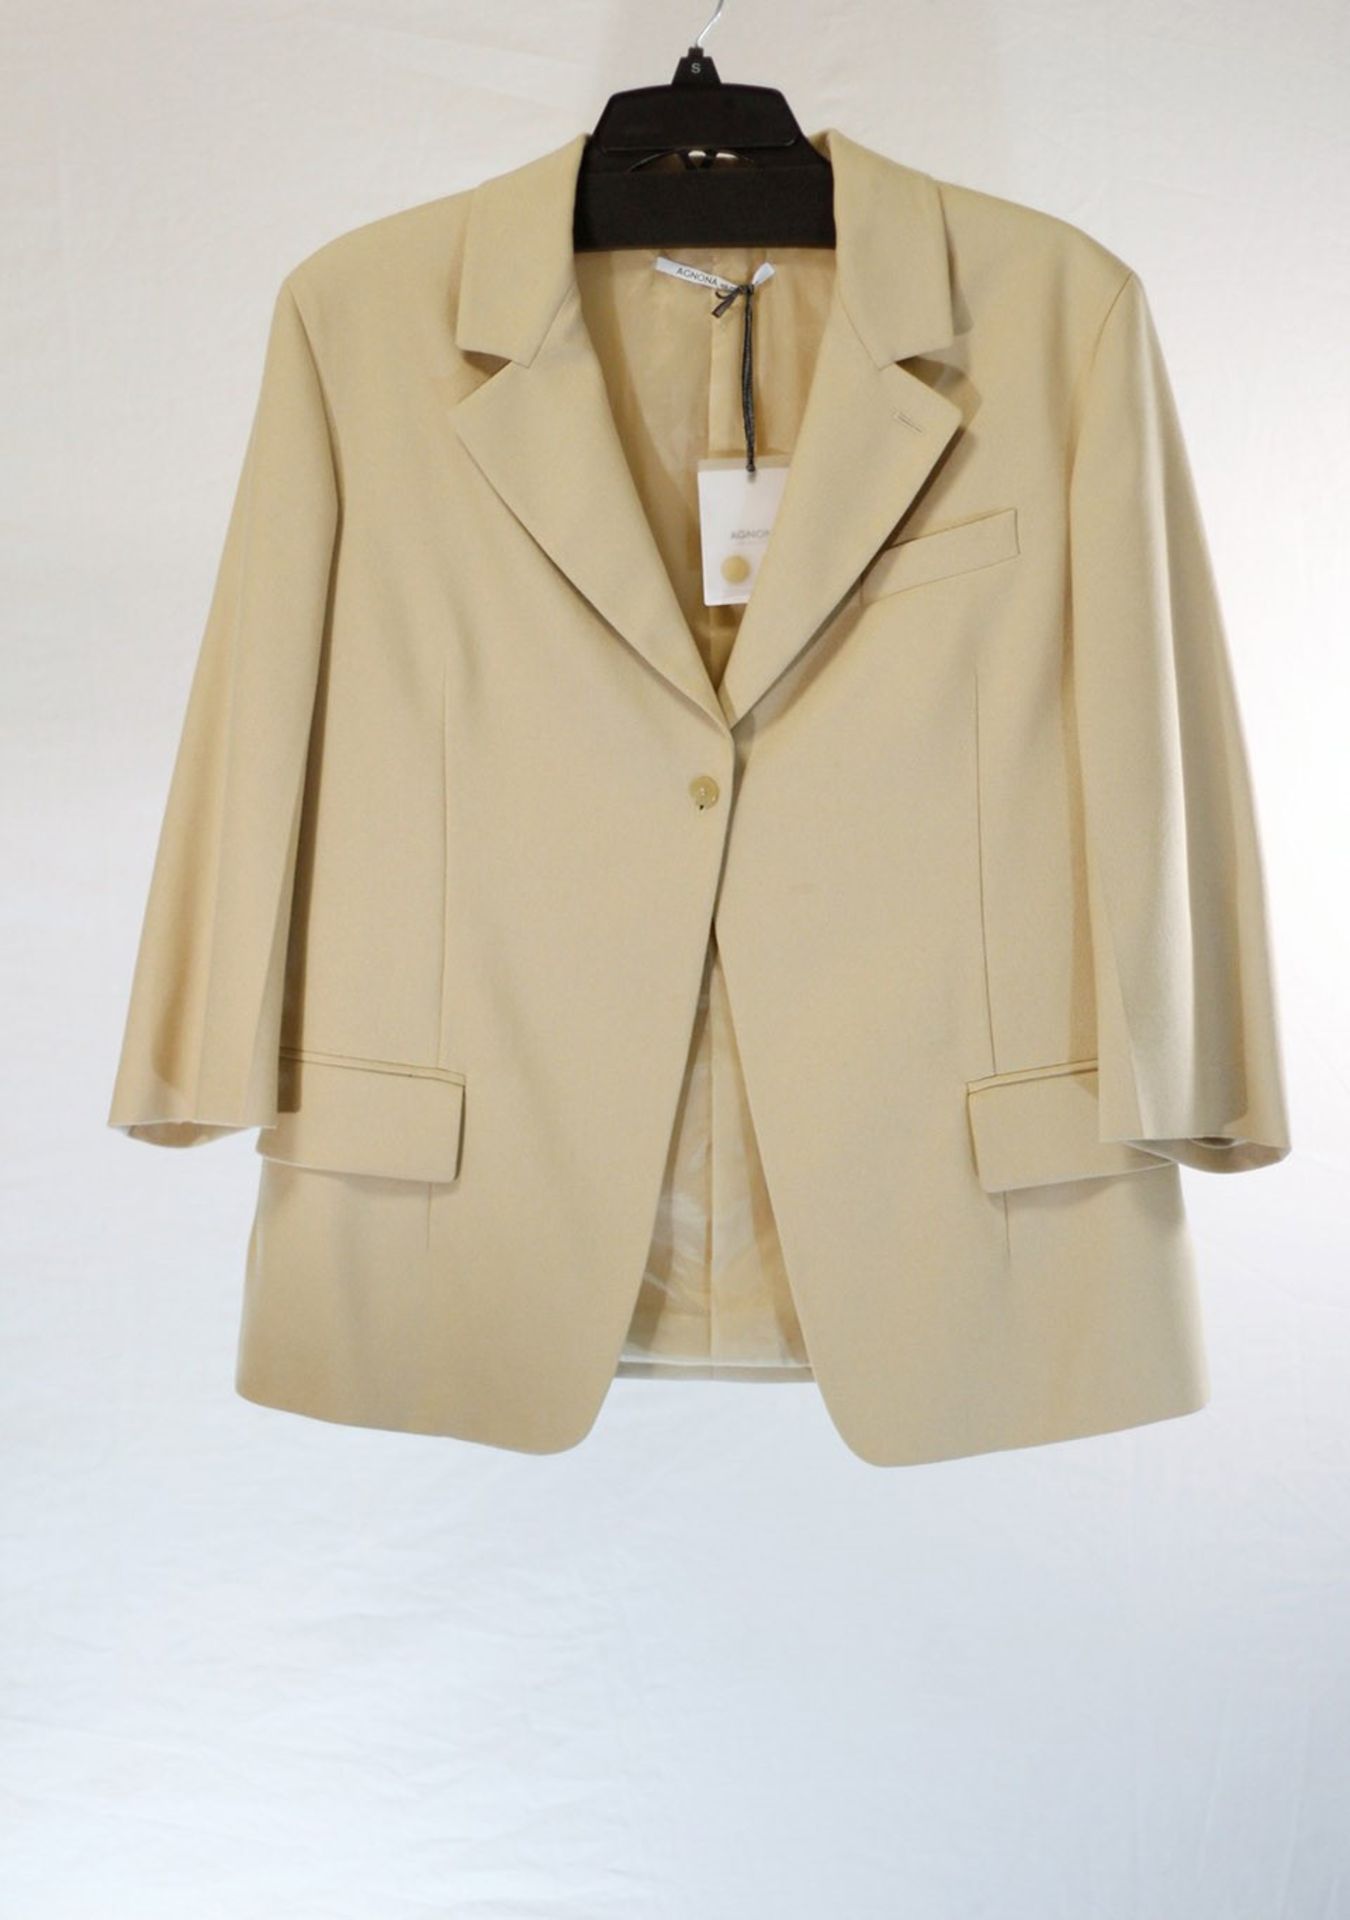 1 x Agnona Beige Jacket - Size: 20 - Material: 98% Cotton, 2% Nylon, 2% Elastane. Lining 85%